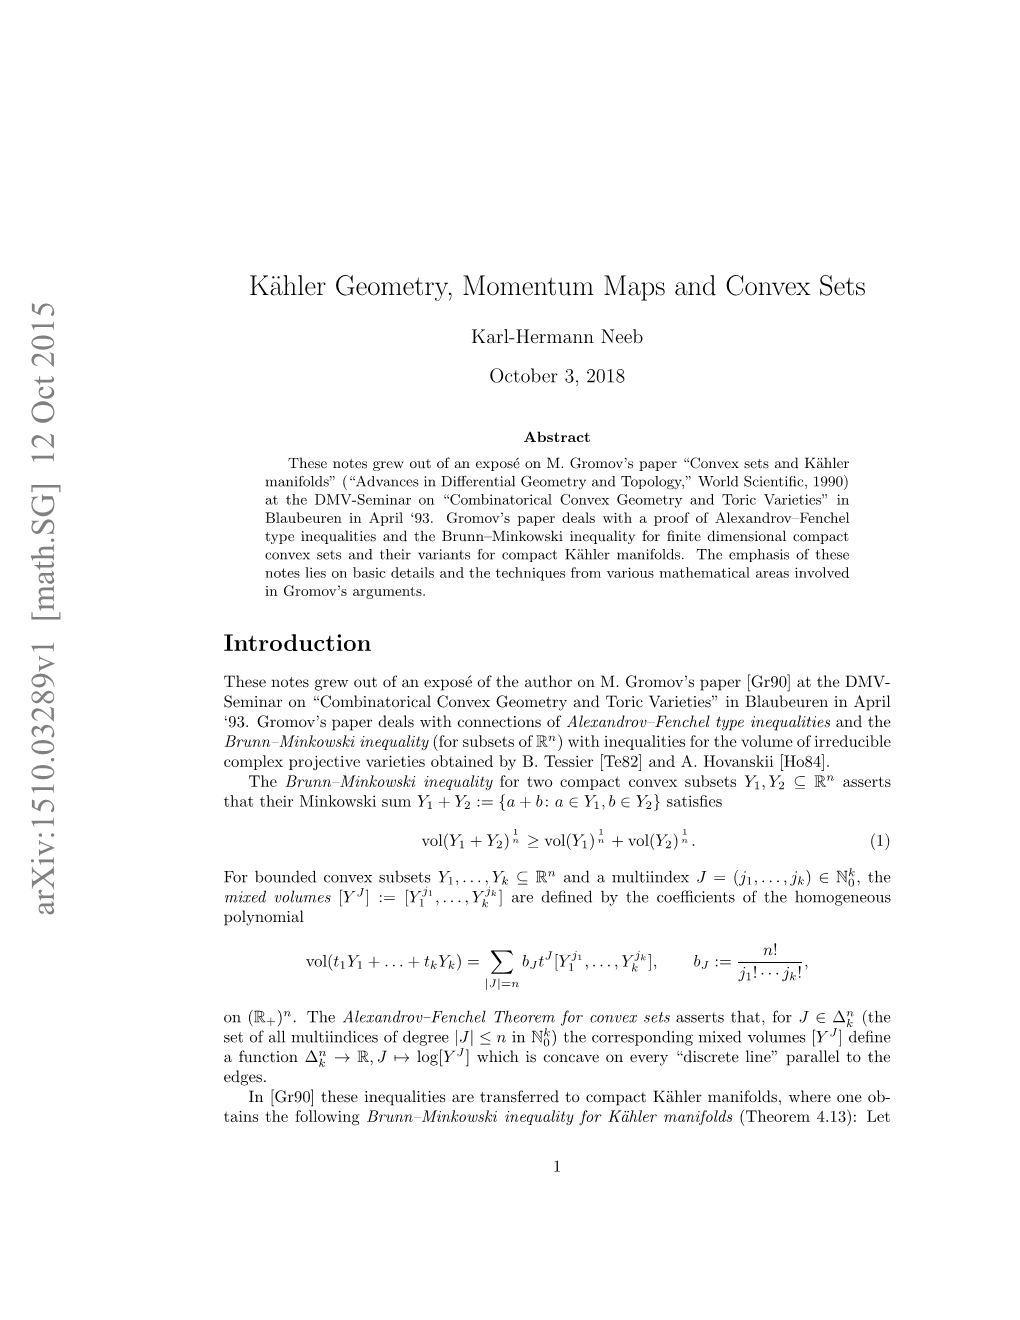 Kaehler Geometry, Momentum Maps and Convex Sets